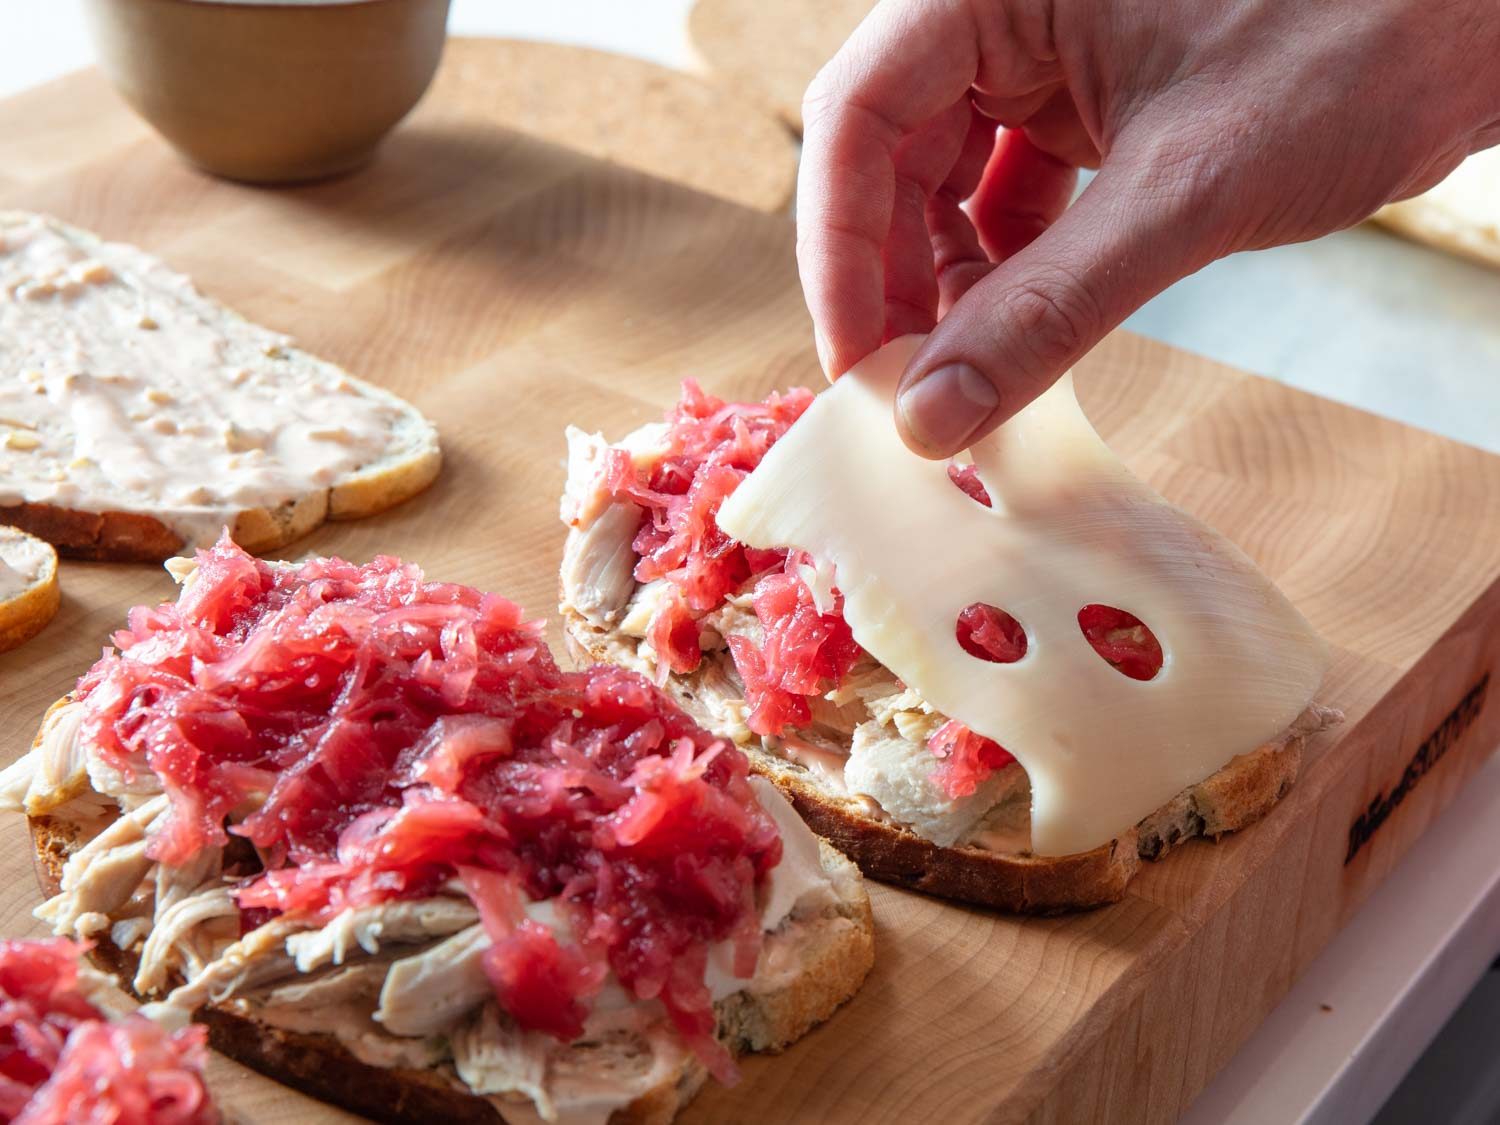 Draping Swiss cheese over a cranberry-sauerkraut while building Reuben sandwiches.